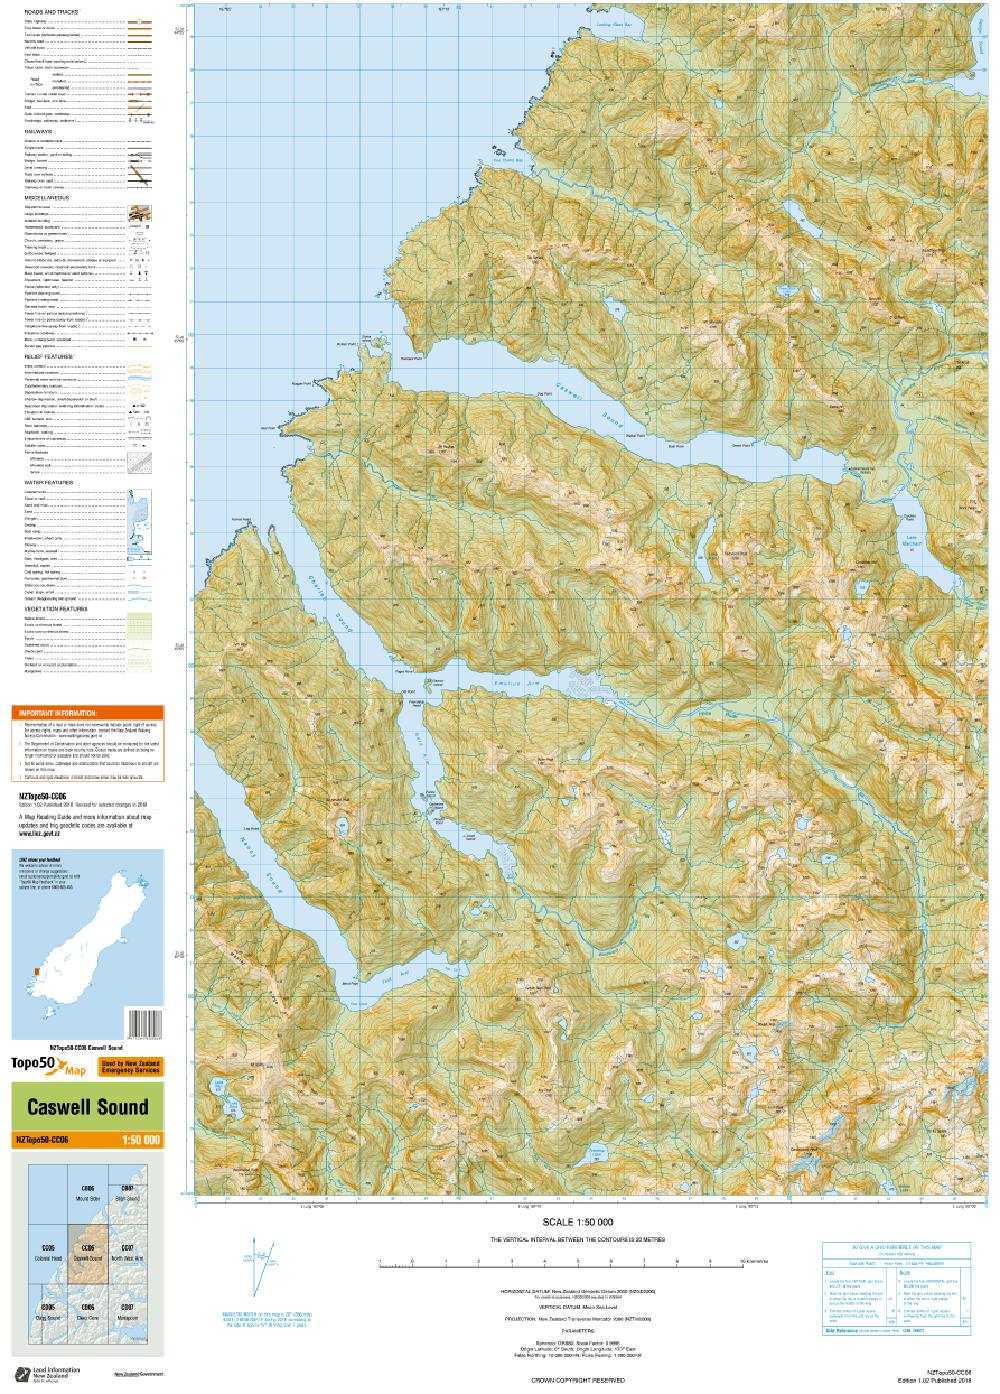 Topo map of Taitetimu/Caswell Sound